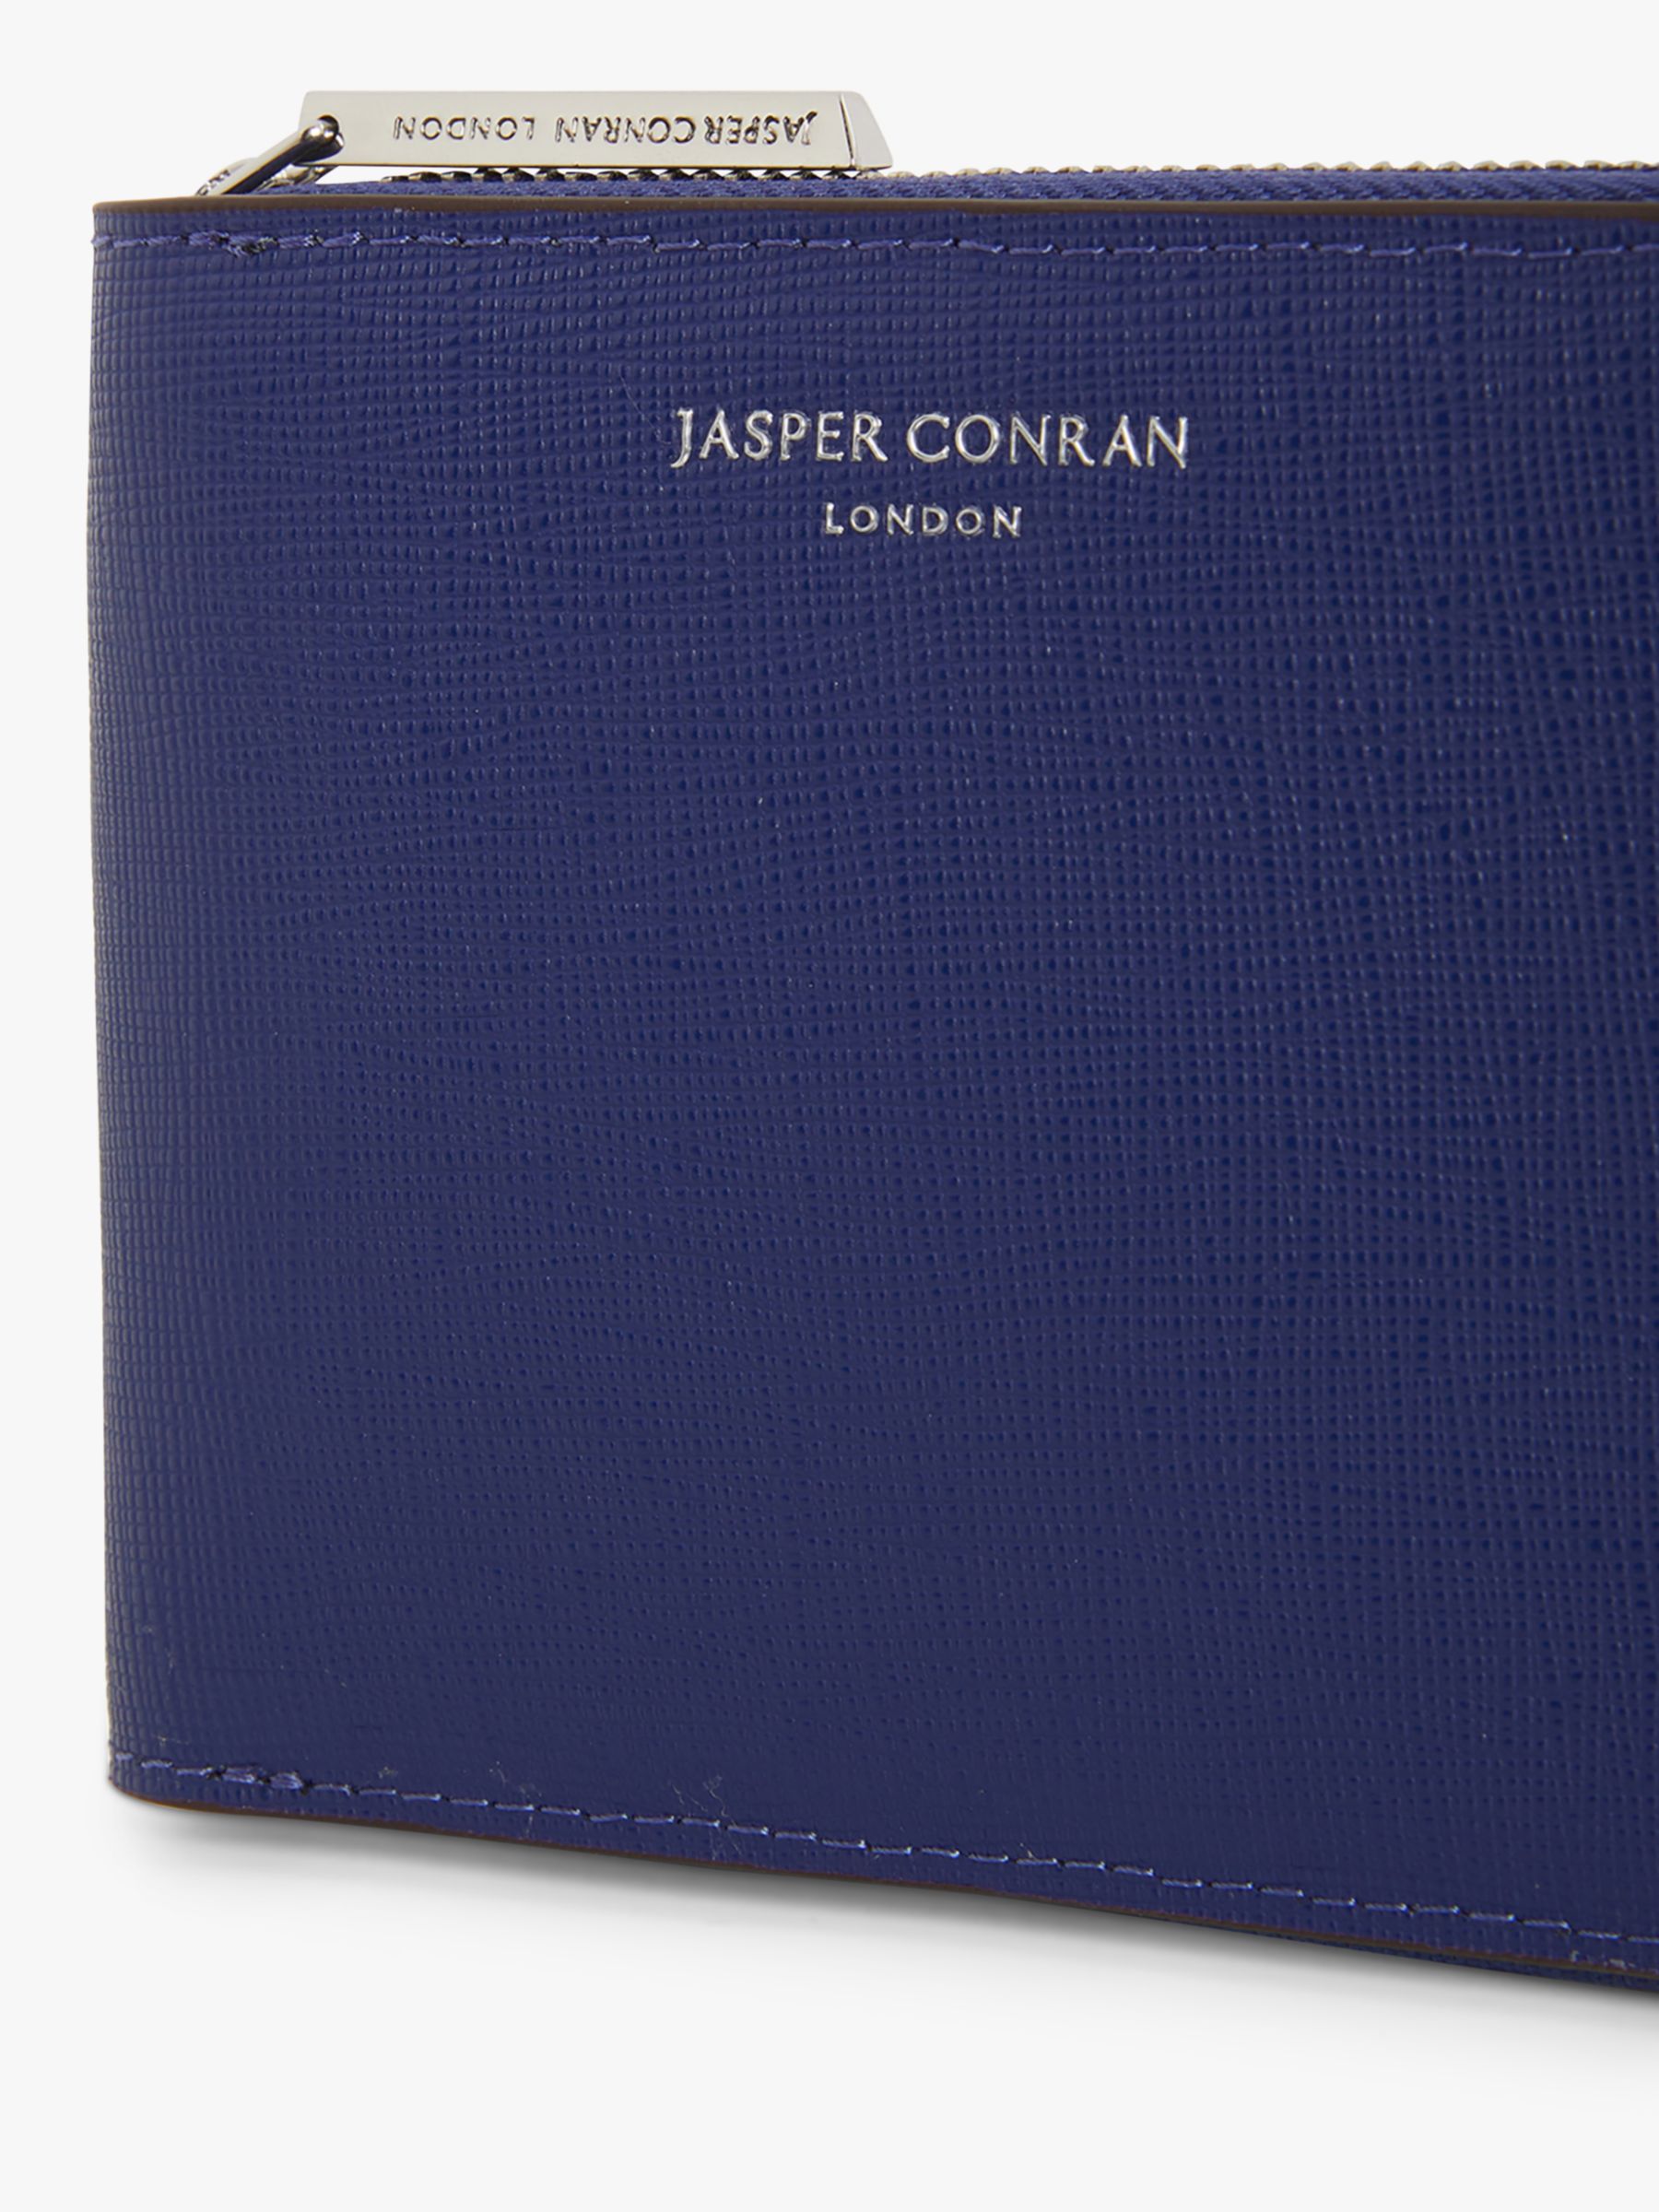 Jasper Conran London Bee Small Cross Hatch Leather Purse, Cobalt